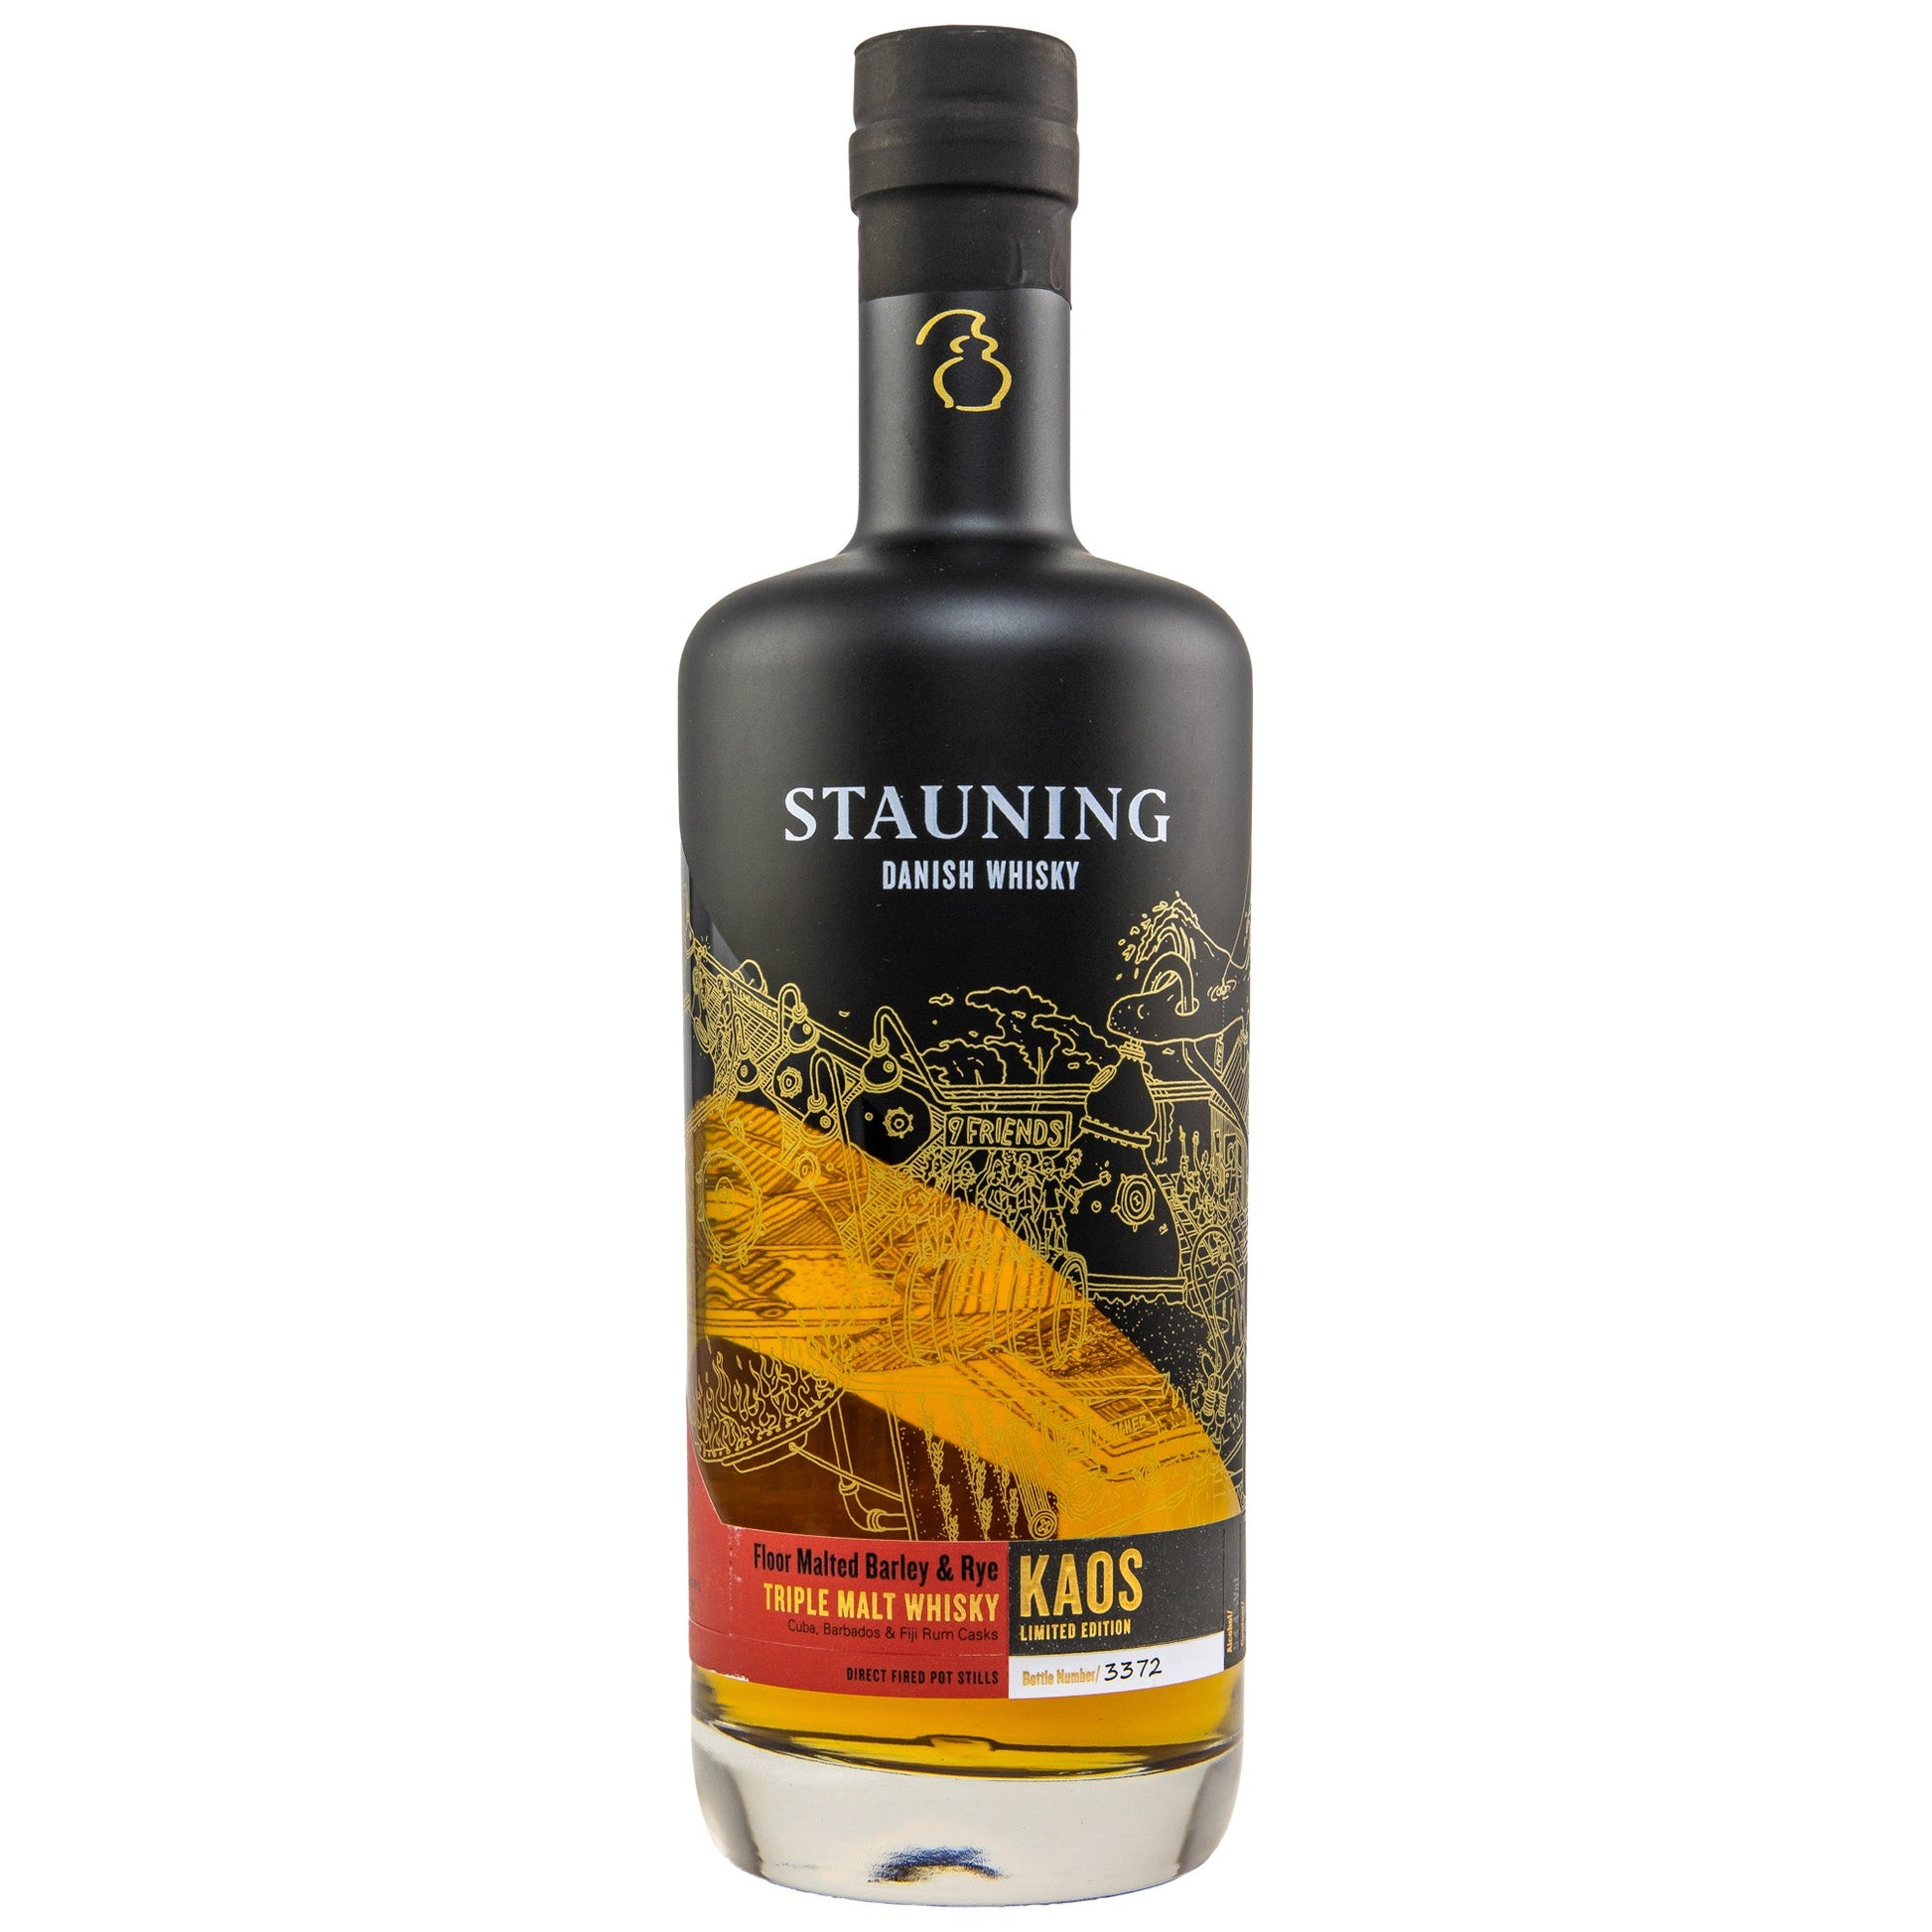 Stauning | KAOS | 4 Jahre | 2017/2022 | Rum Casks | Danish Triple Malt Whisky | 0,7l | 54,4%GET A BOTTLE